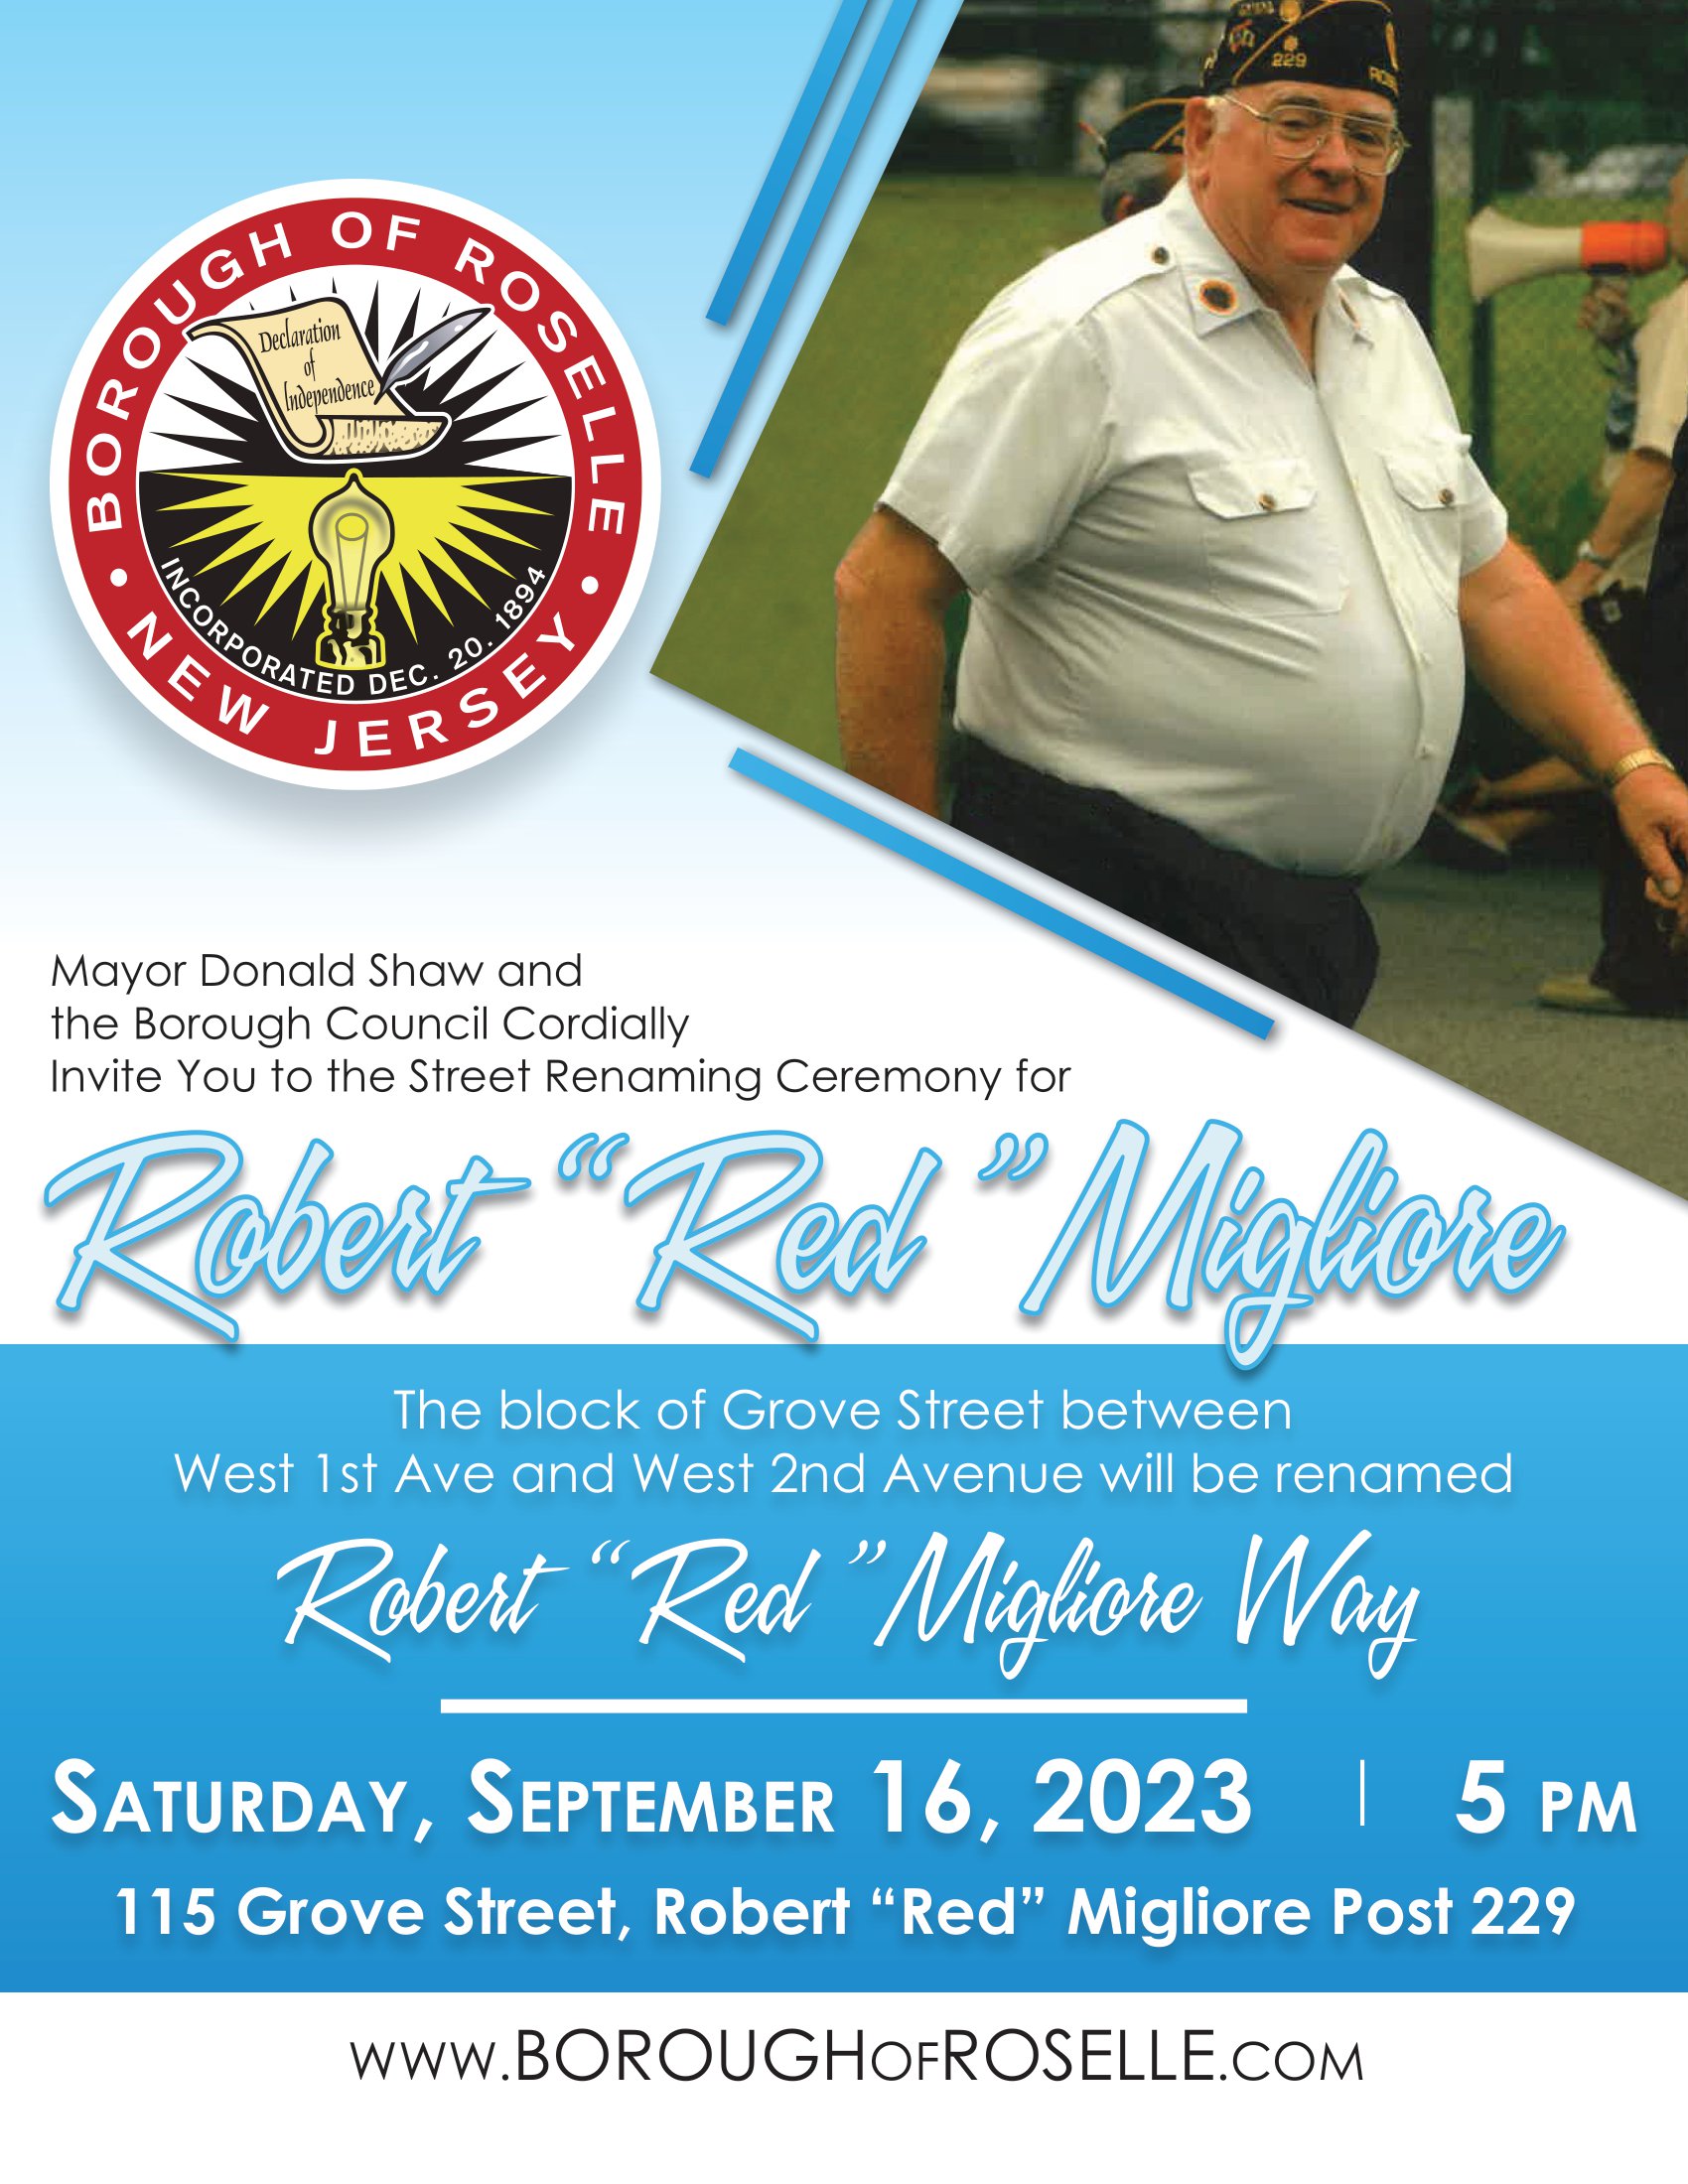 Robert Red Migliore Way flyer v6